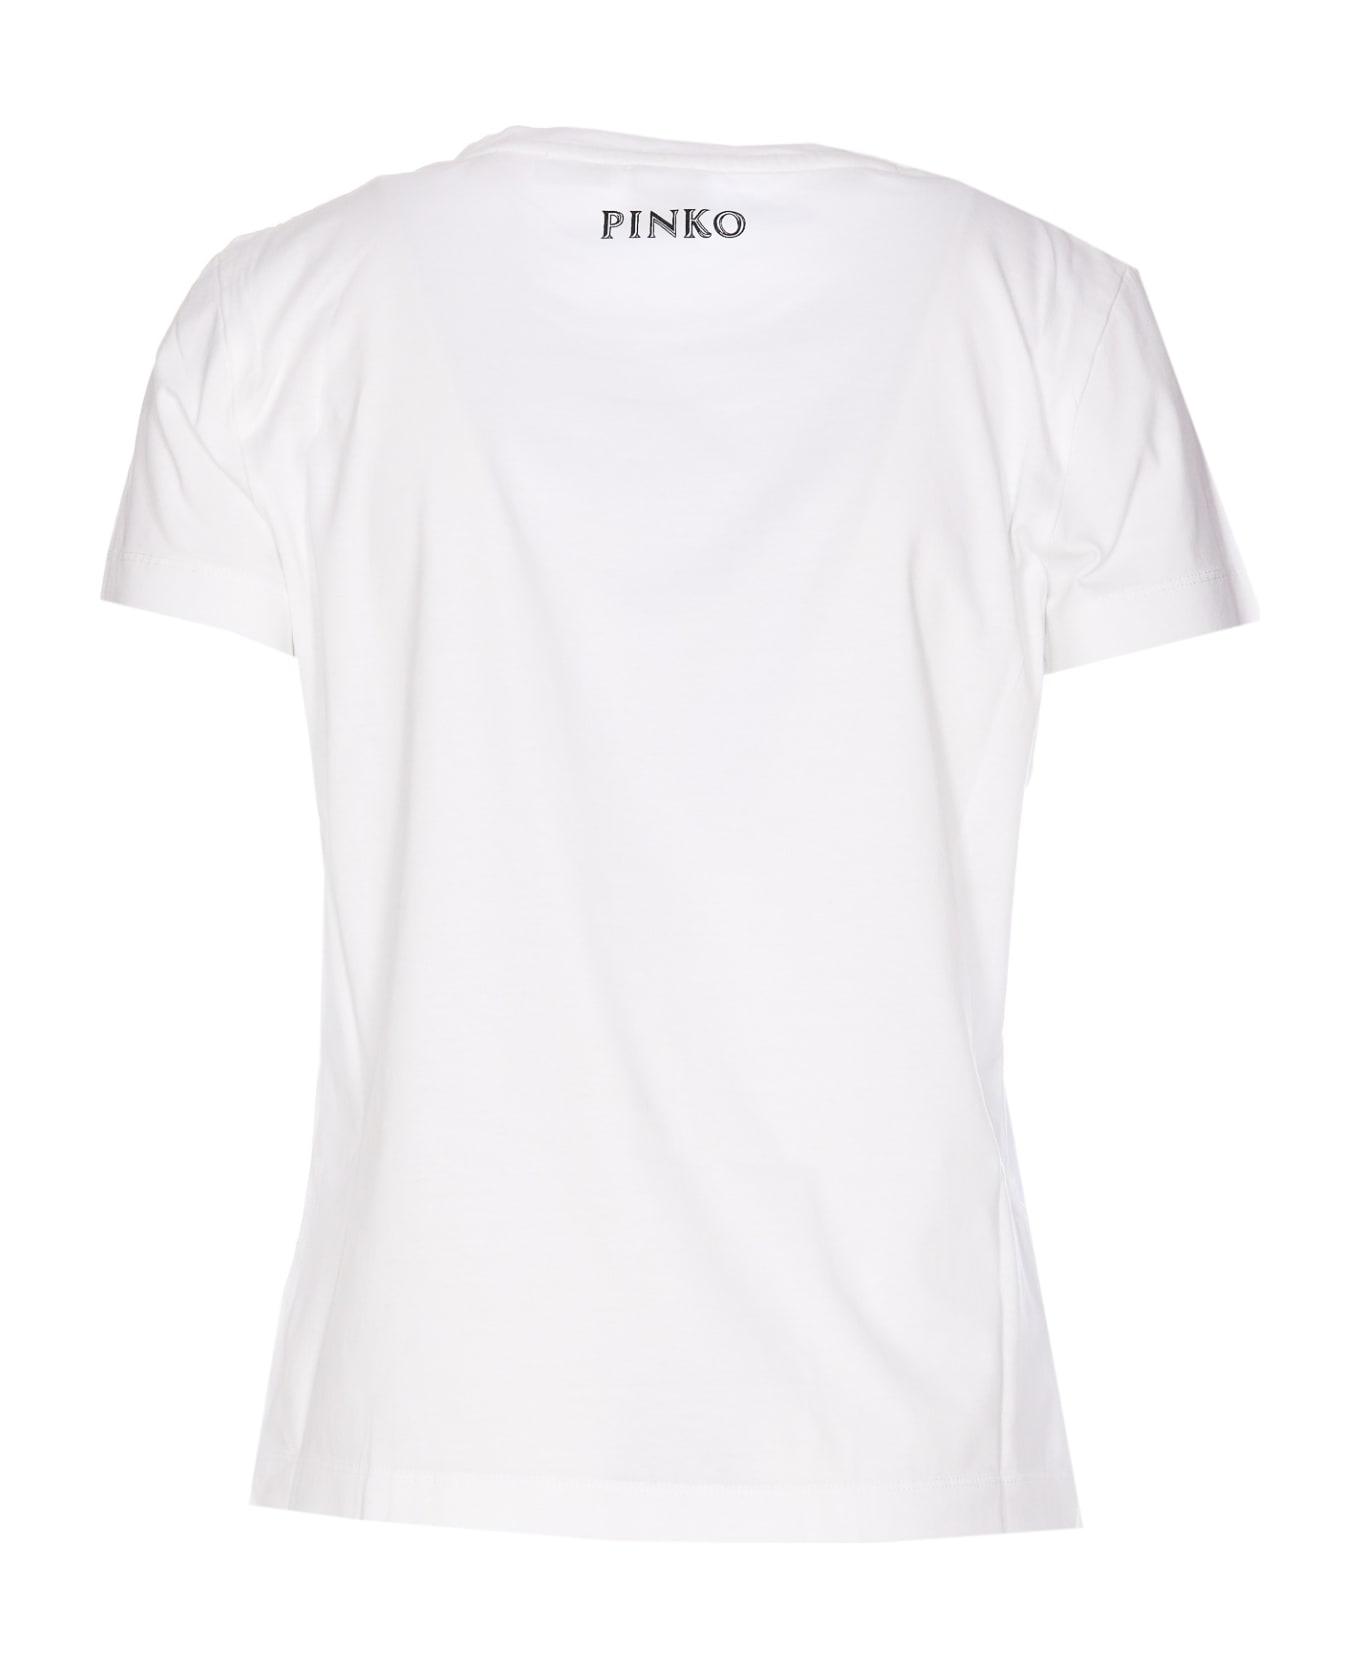 Pinko Graphic Printed Crewneck T-shirt - White Tシャツ